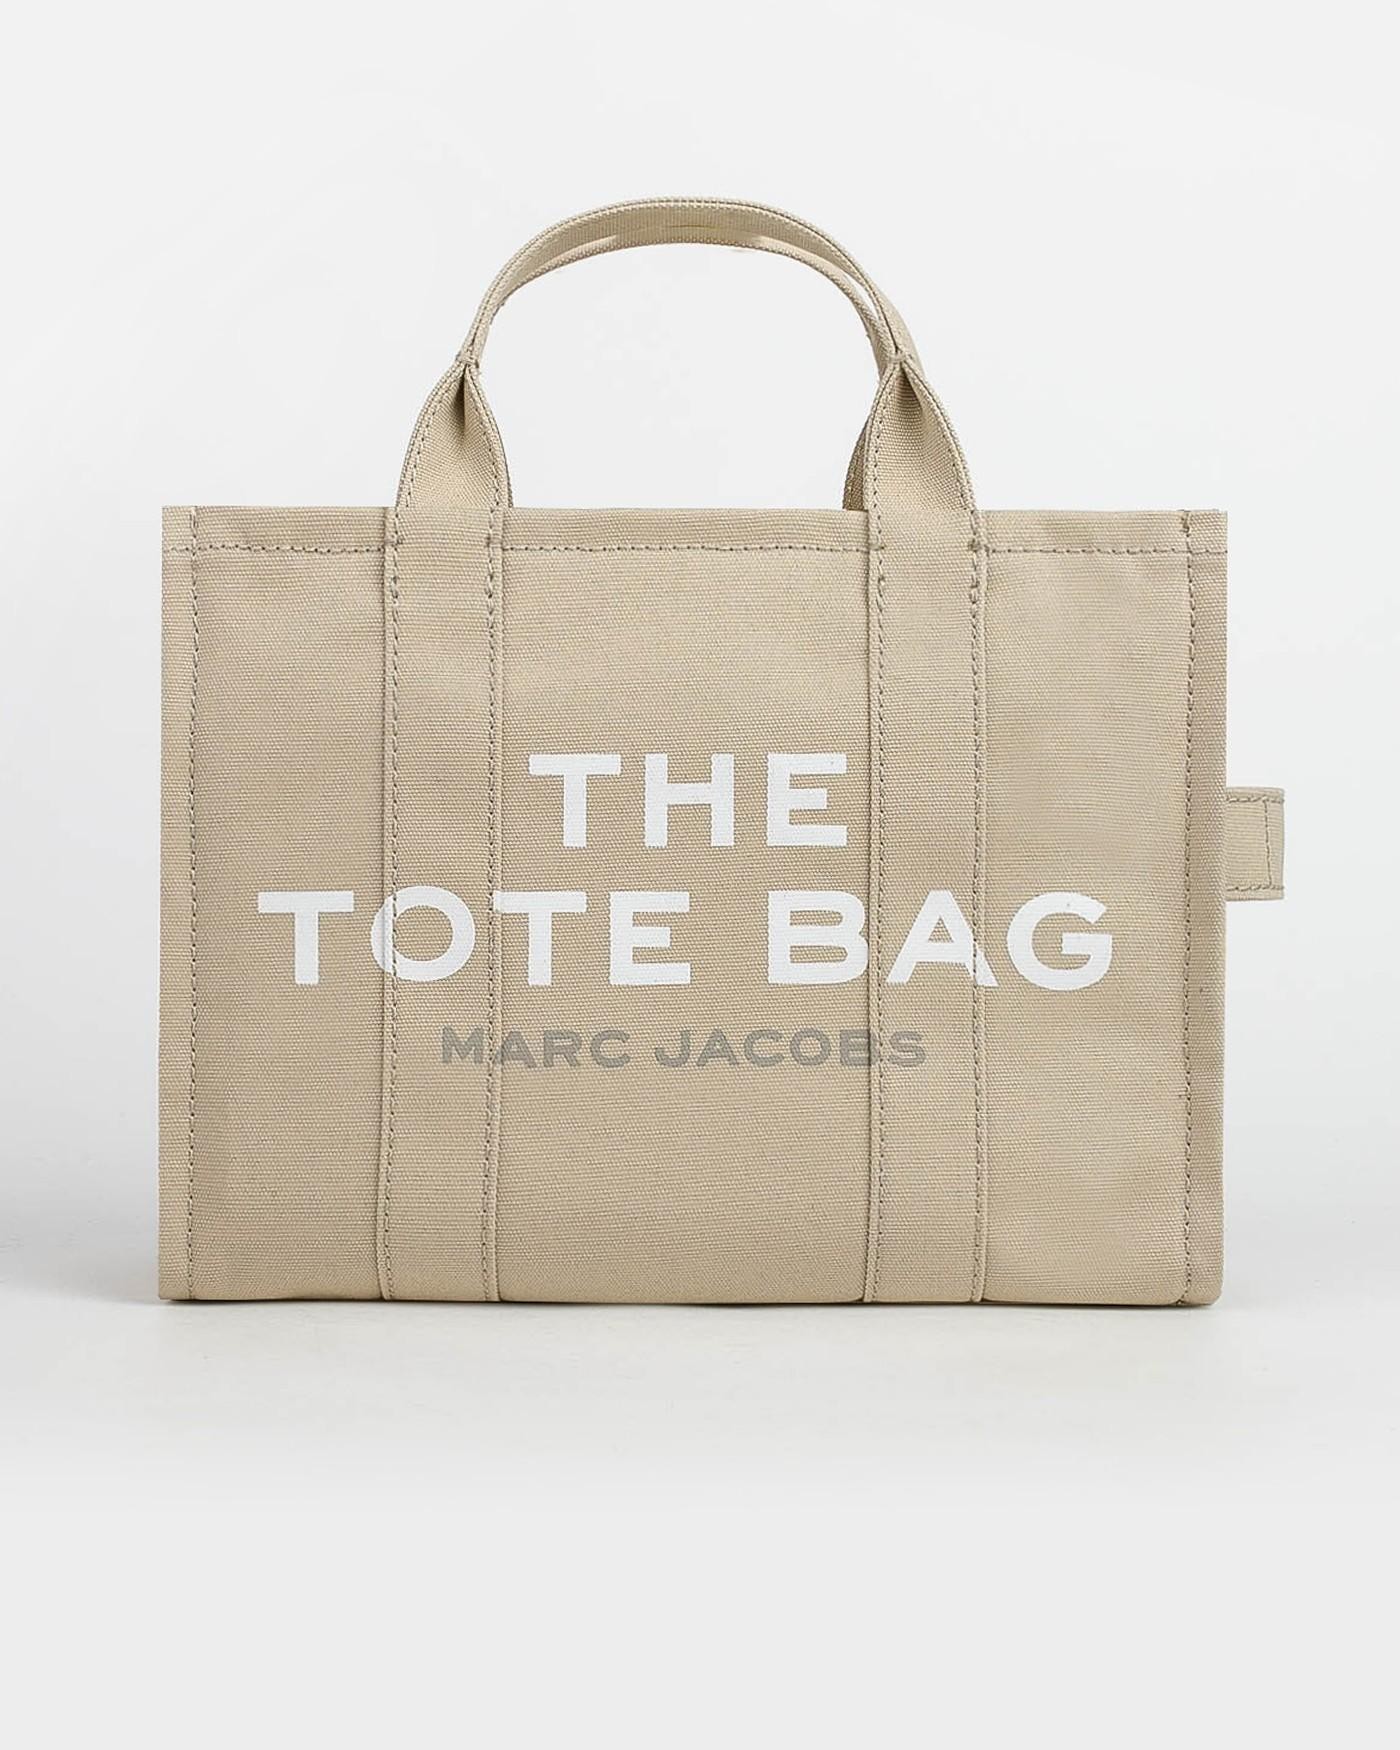 MARC JACOBS Tote bag para mujer Marc Jacobs - Medium negro